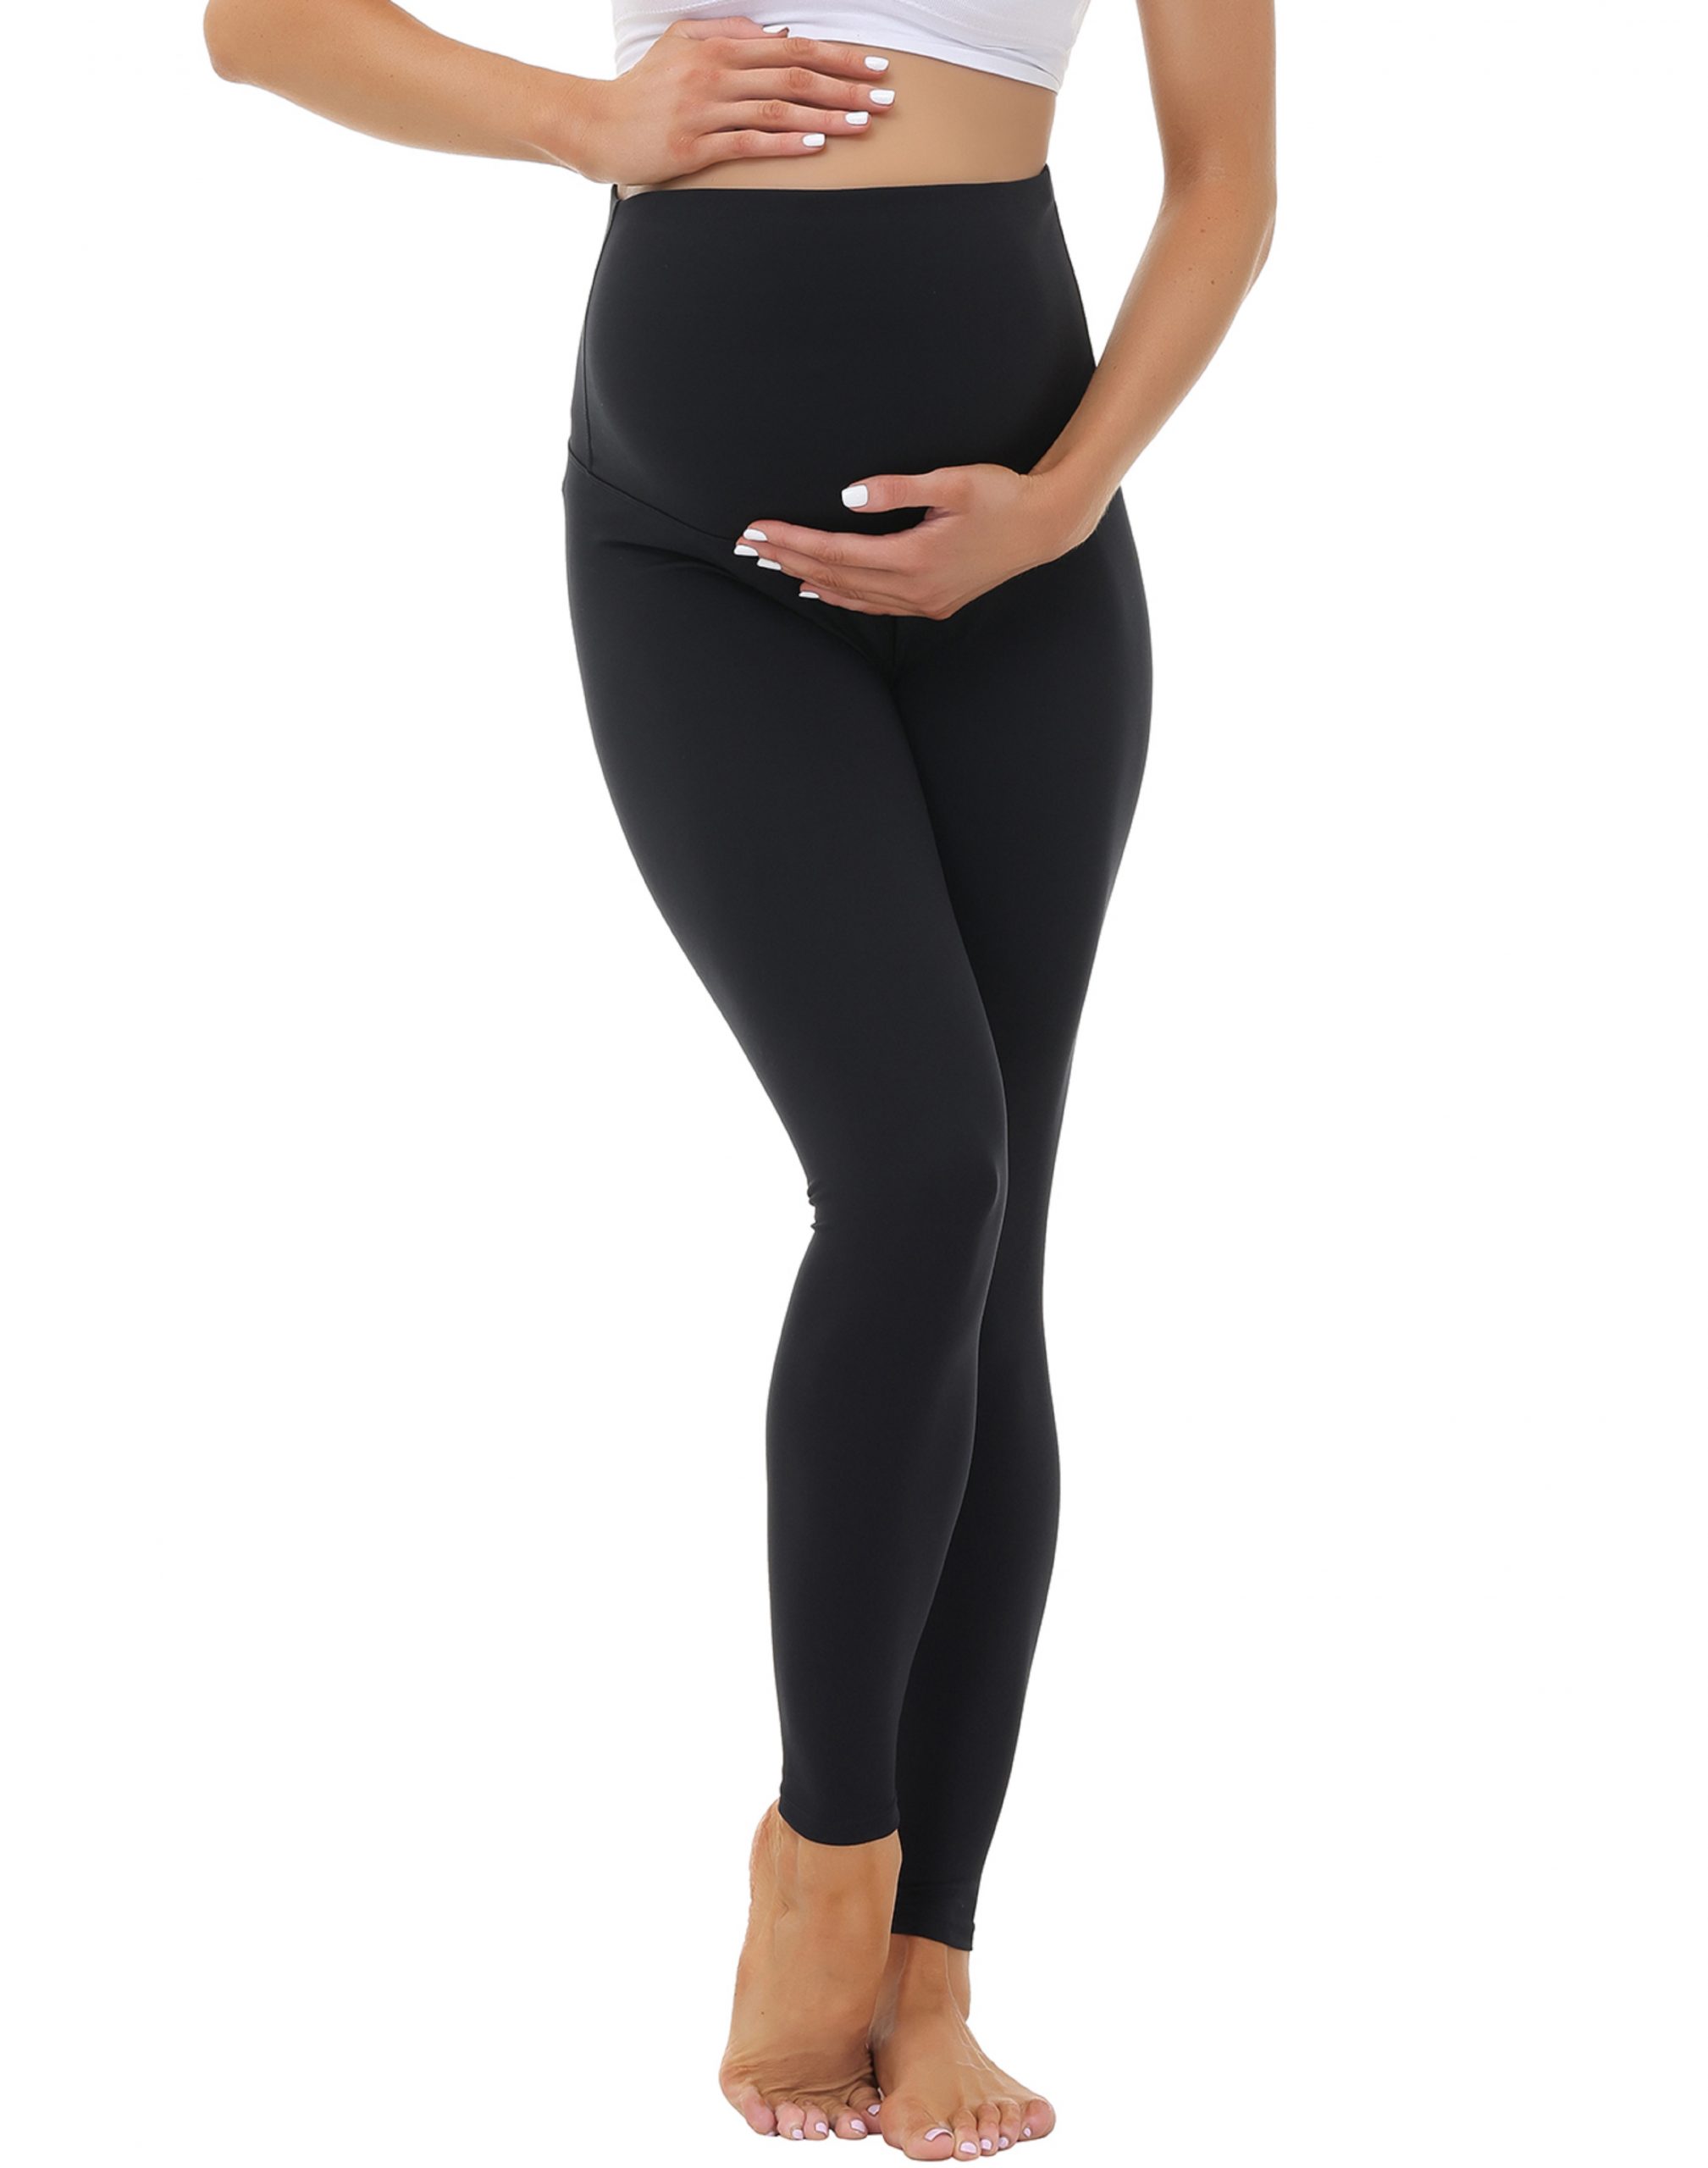 HOFISH Women’s Maternity Pants High Waisted Leggings Pregnancy Sports Yoga Tight Pants